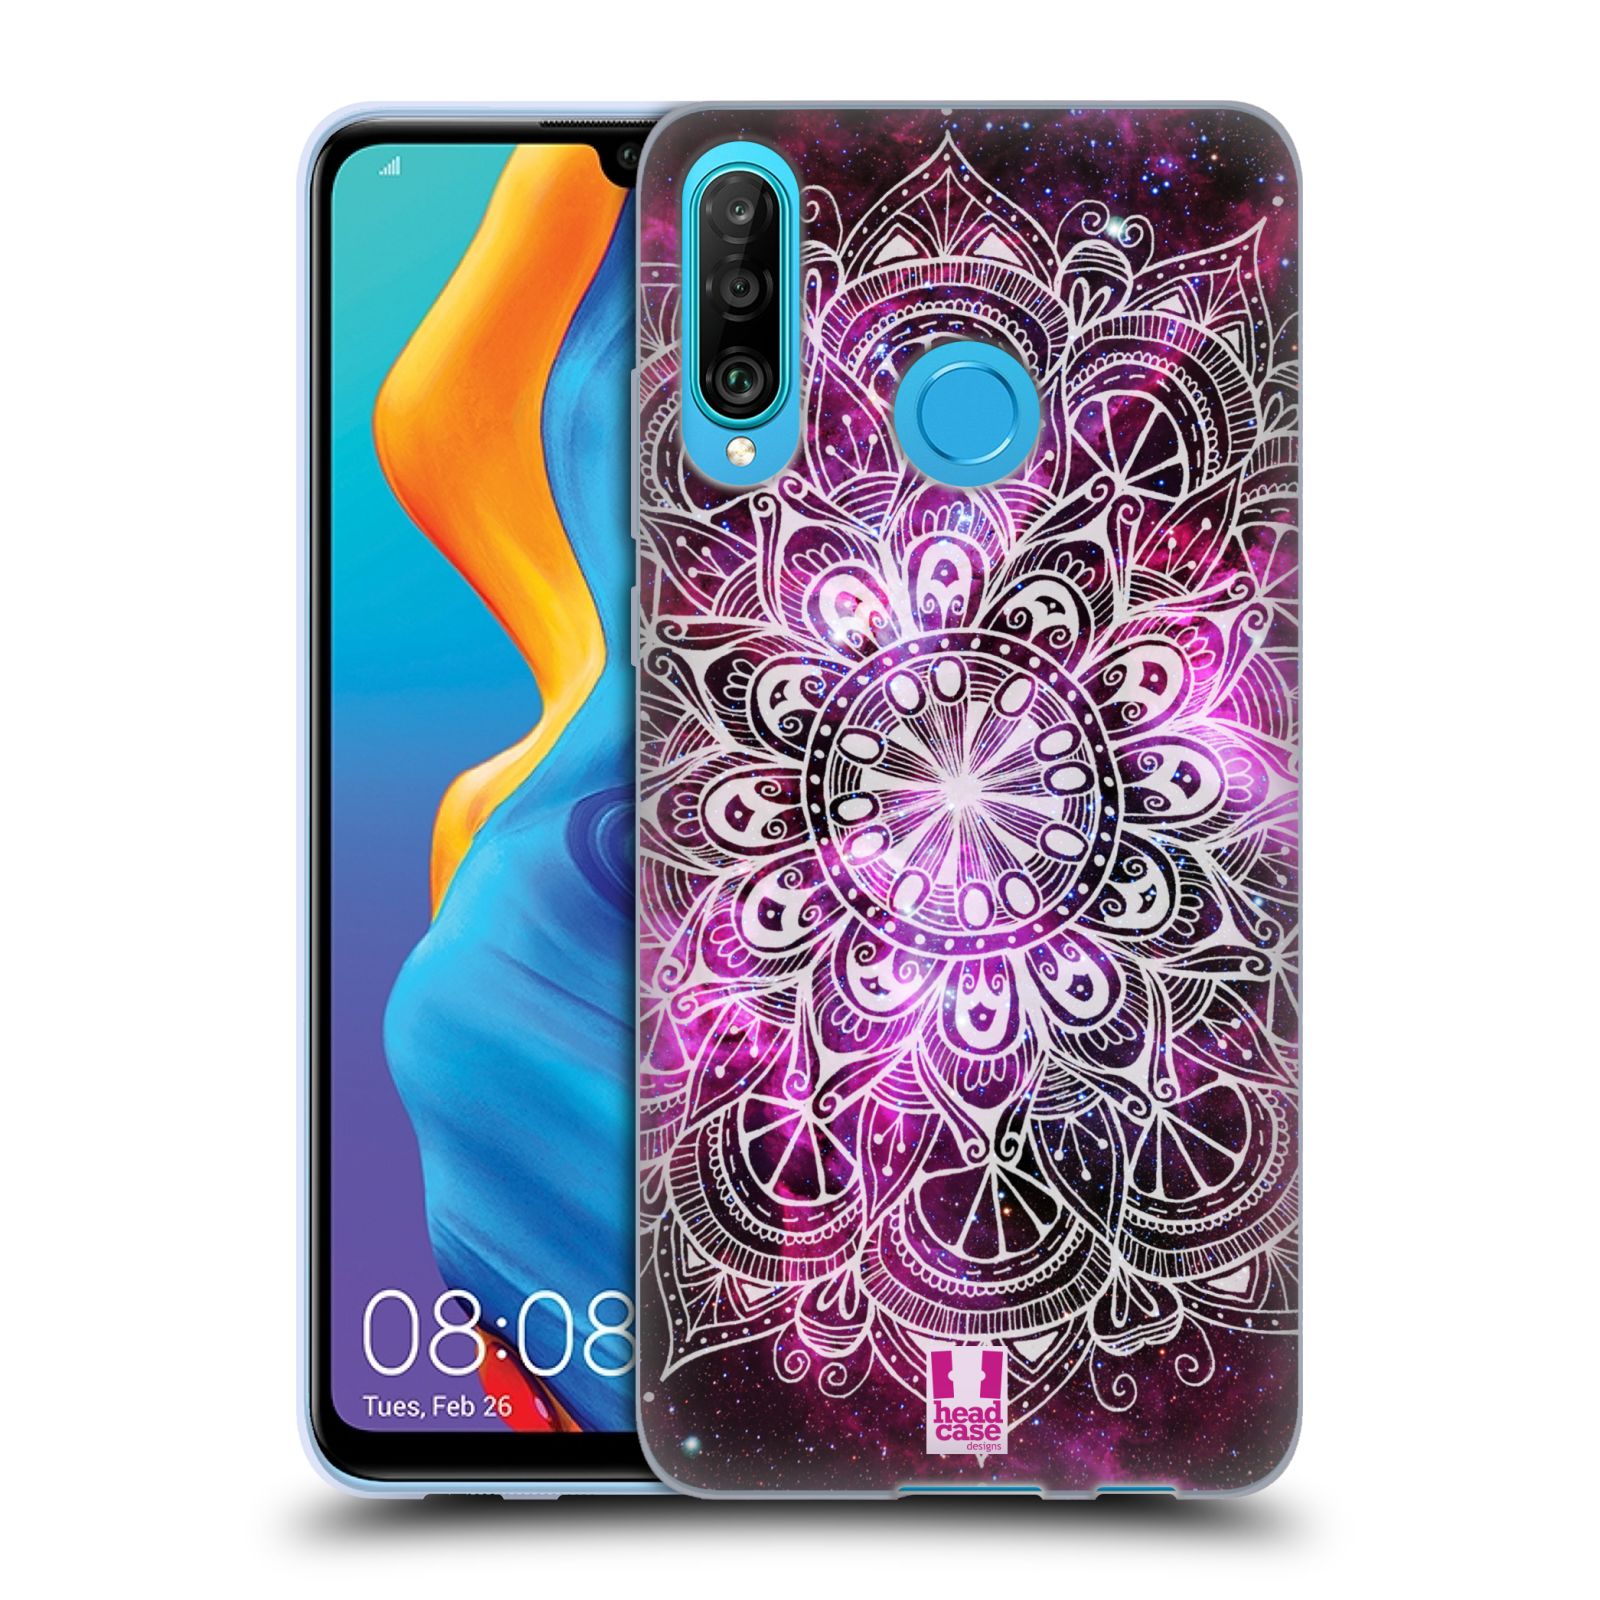 Silikonové pouzdro na mobil Huawei P30 Lite - Head Case - Mandala Doodle Nebula (Silikonový kryt, obal, pouzdro na mobilní telefon Huawei P30 Lite Dual Sim (MAR-L01A, MAR-L21A, MAR-LX1A) s motivem Mandala Doodle Nebula)